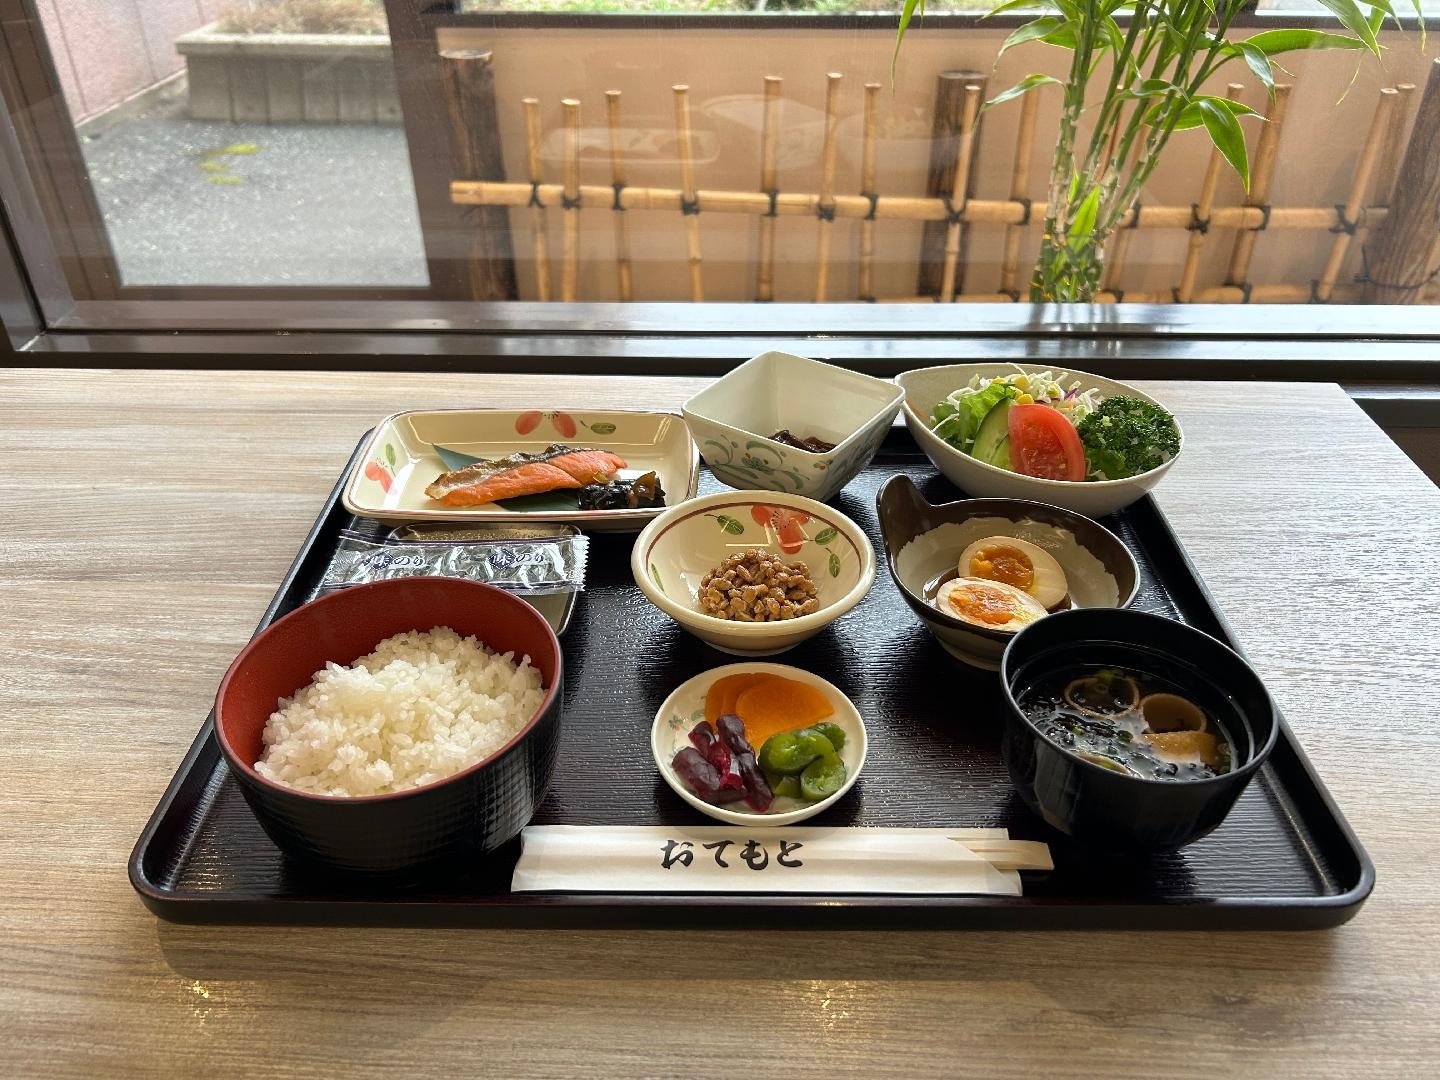 Breakfast: Japanese set